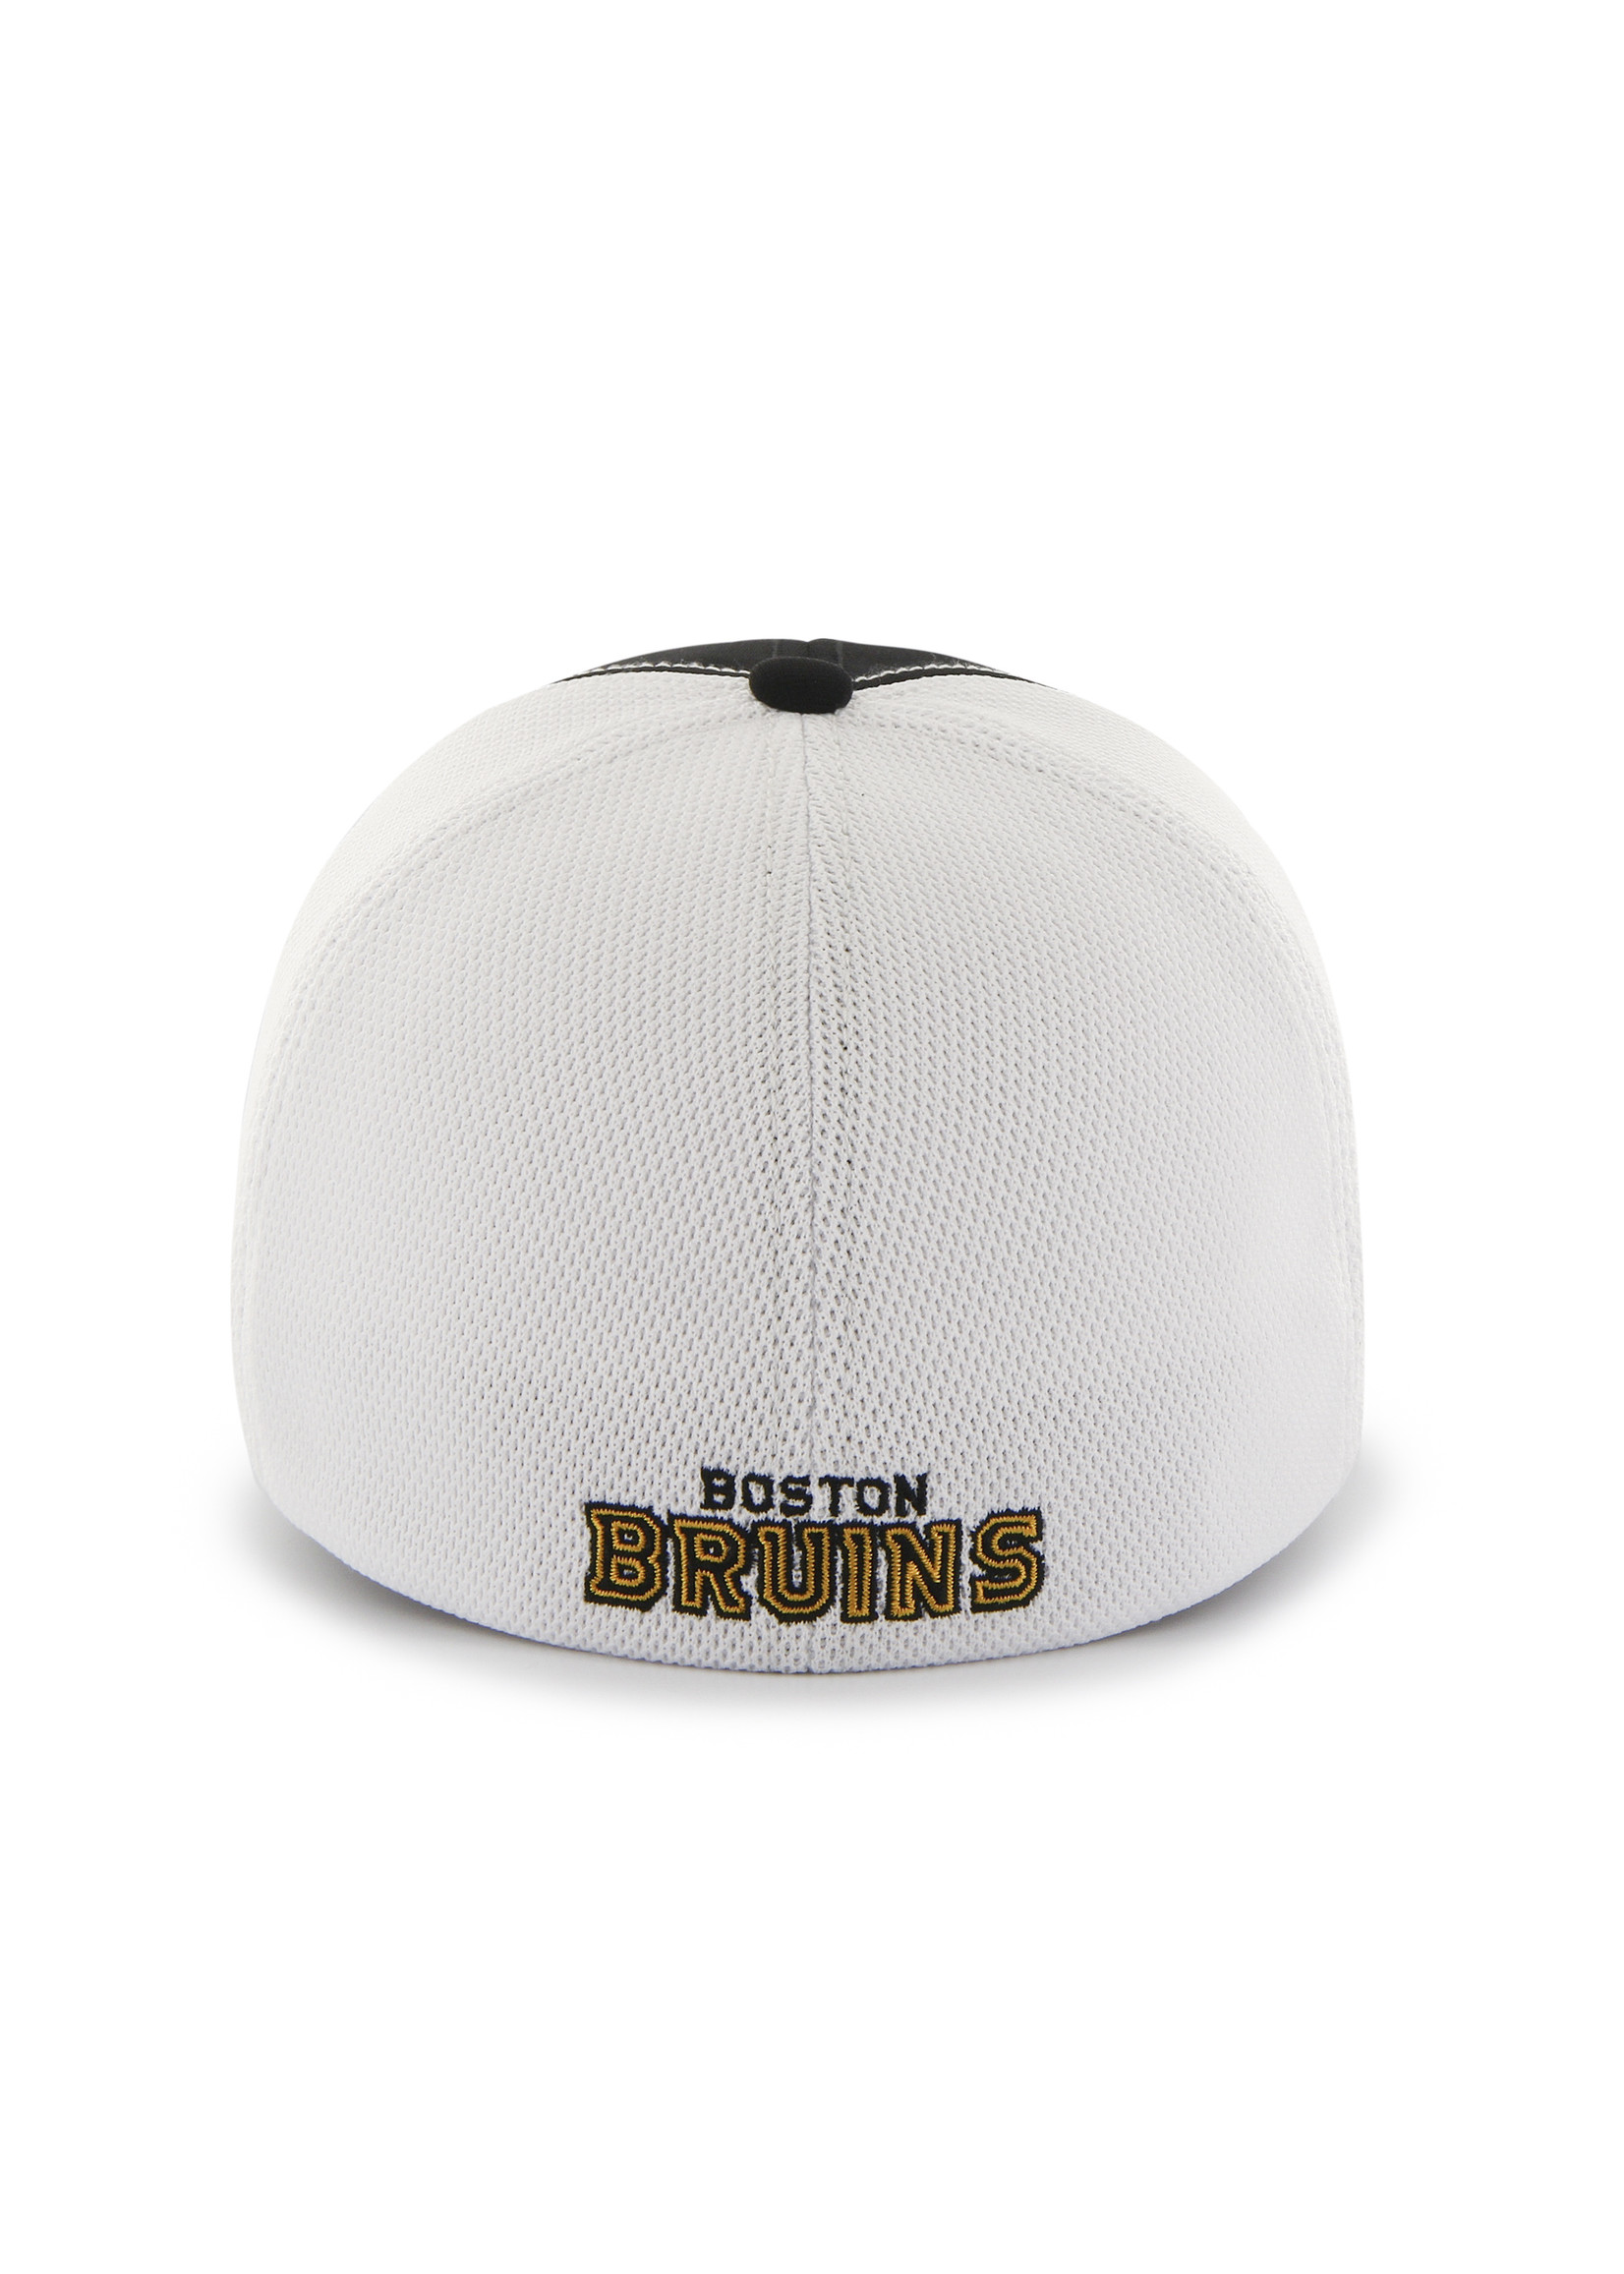 '47 Brand Bruins Closer Flex Fit Hat